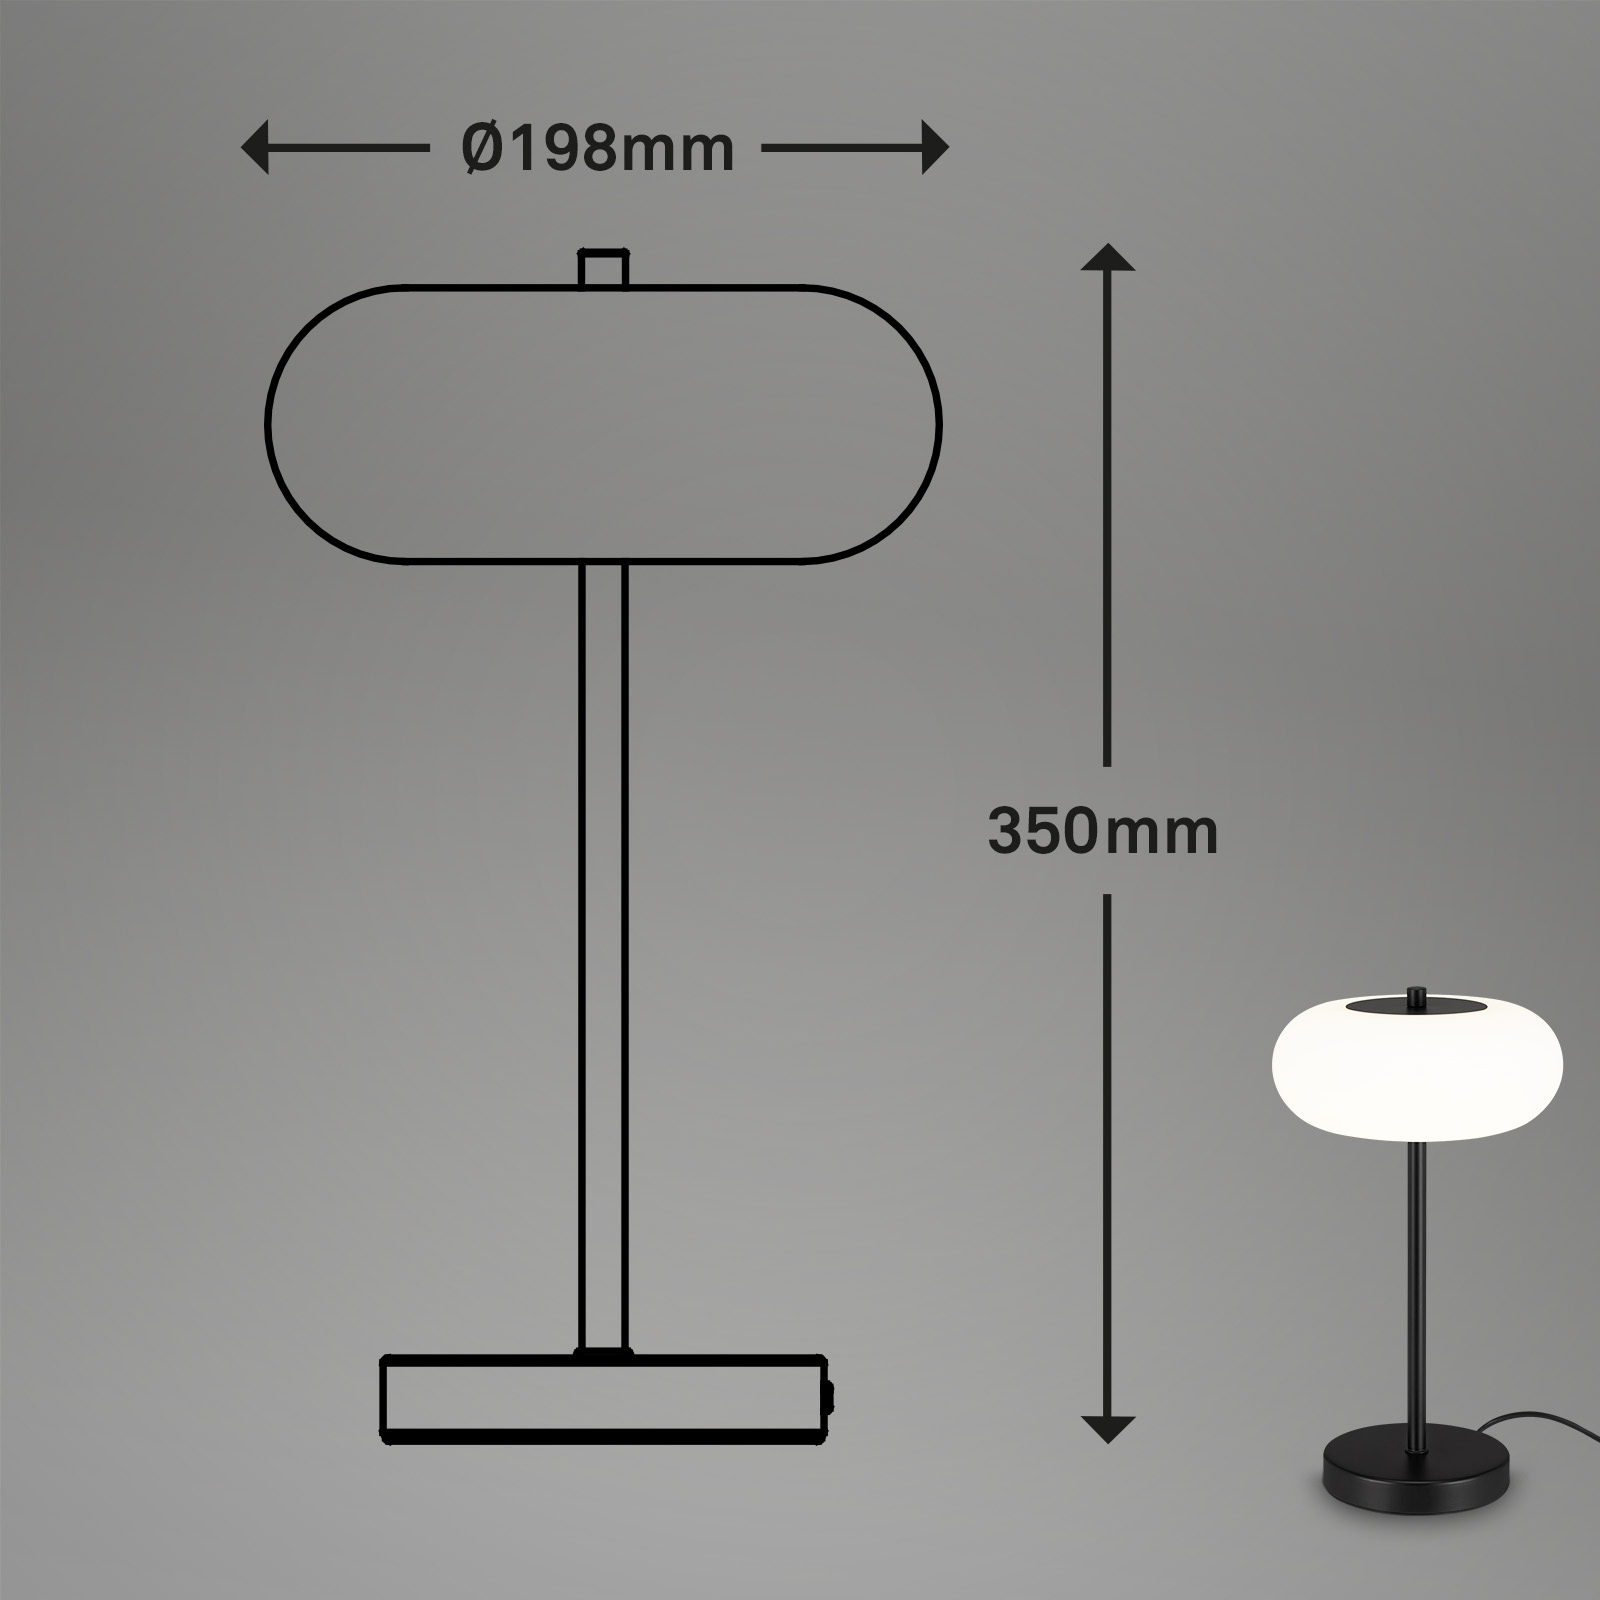 LED tafellamp Voco met touchdimmer, zwart